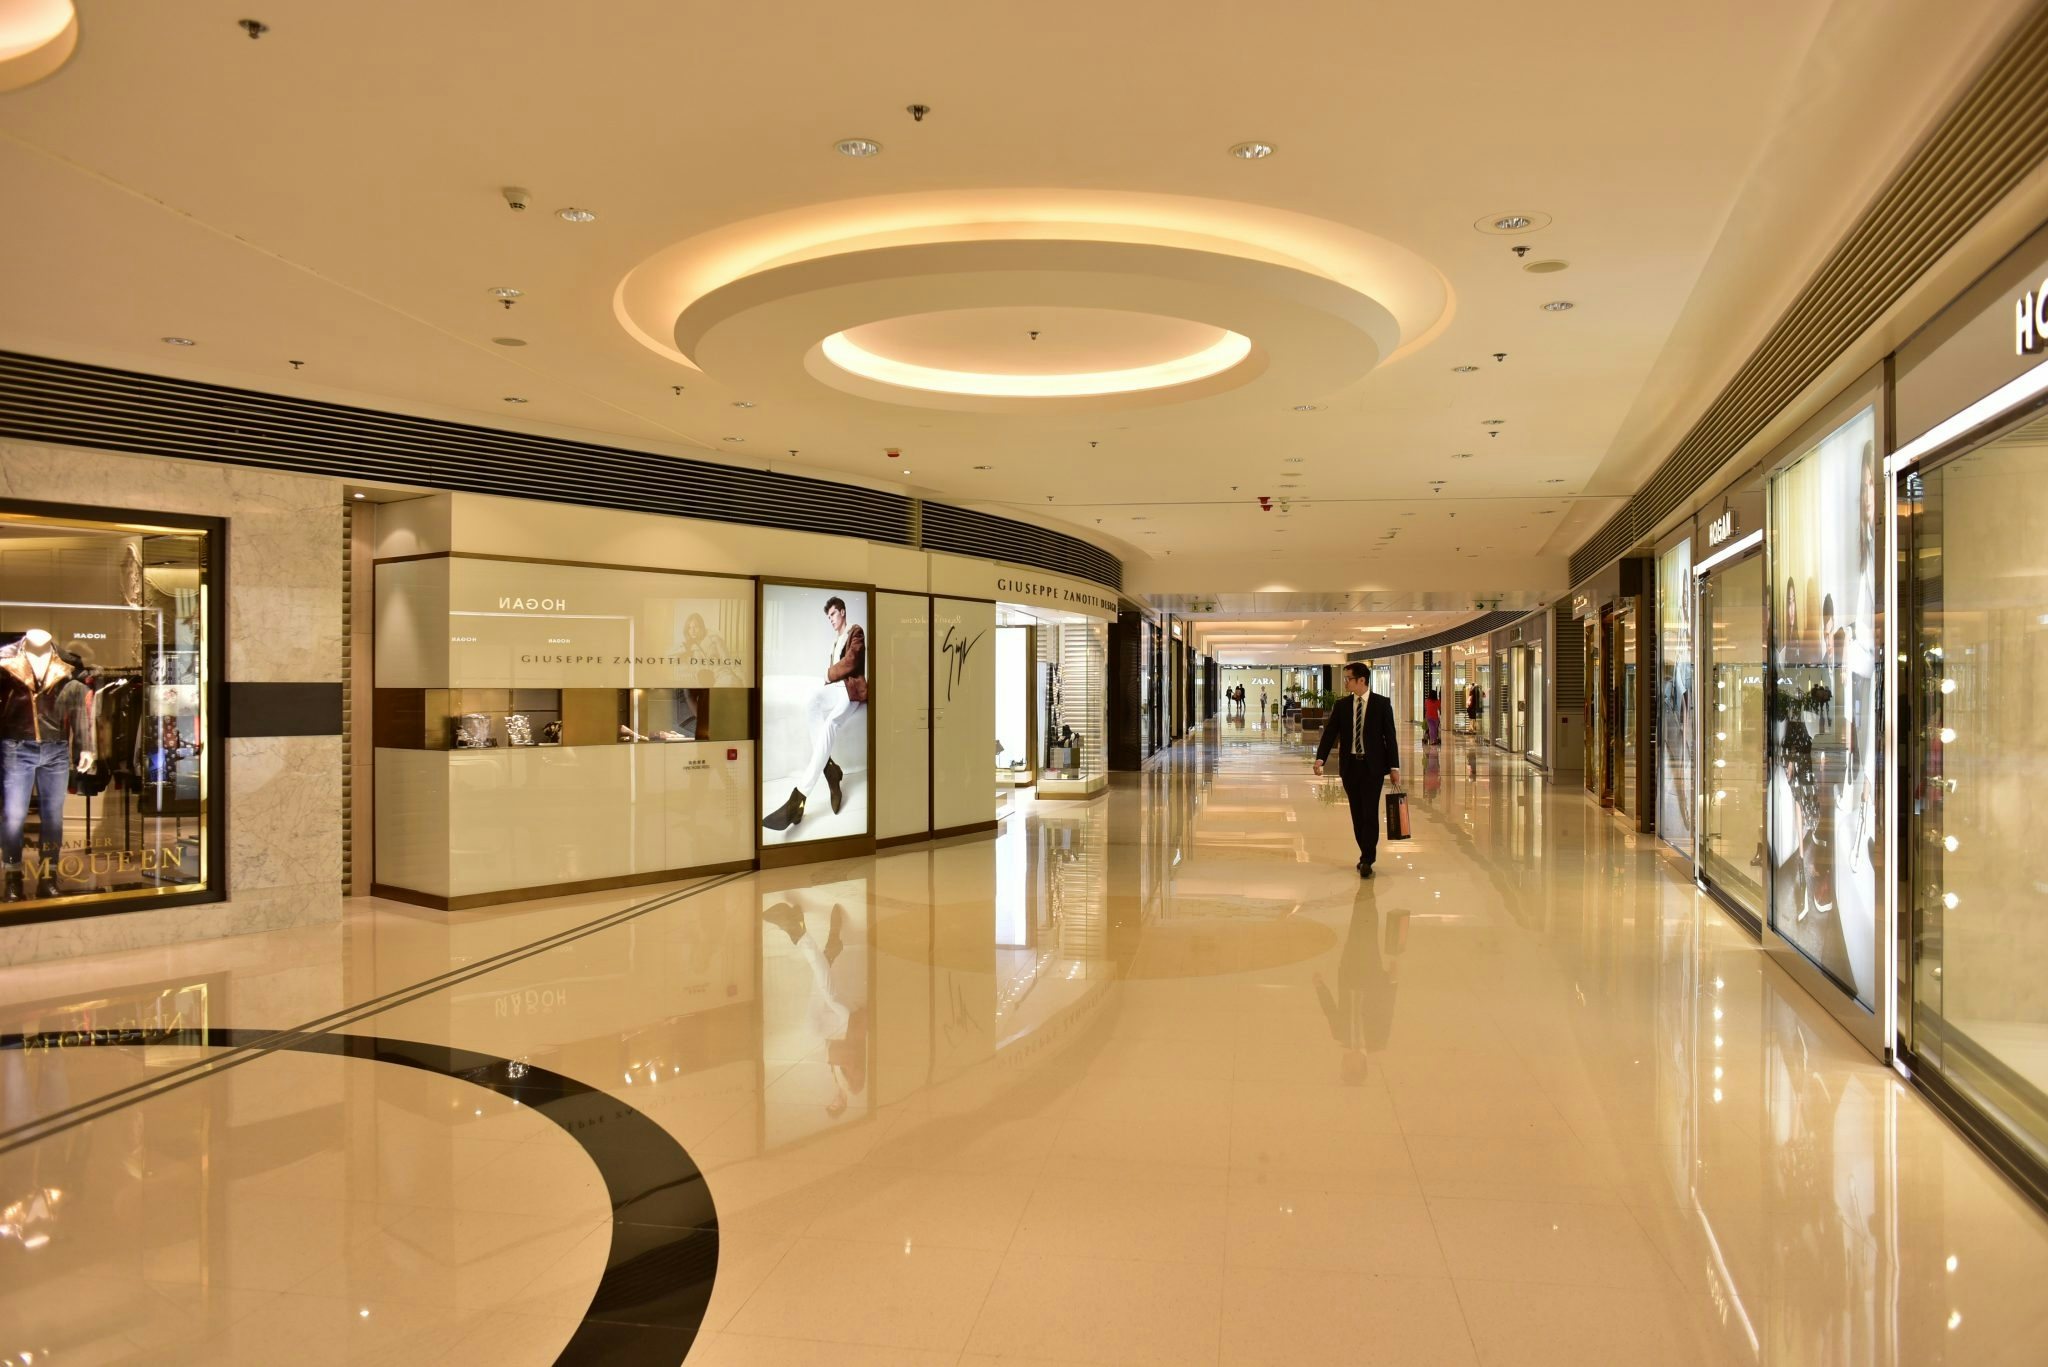 Interior of the Hong Kong's IFC Mall. Photo: ssray / Shutterstock